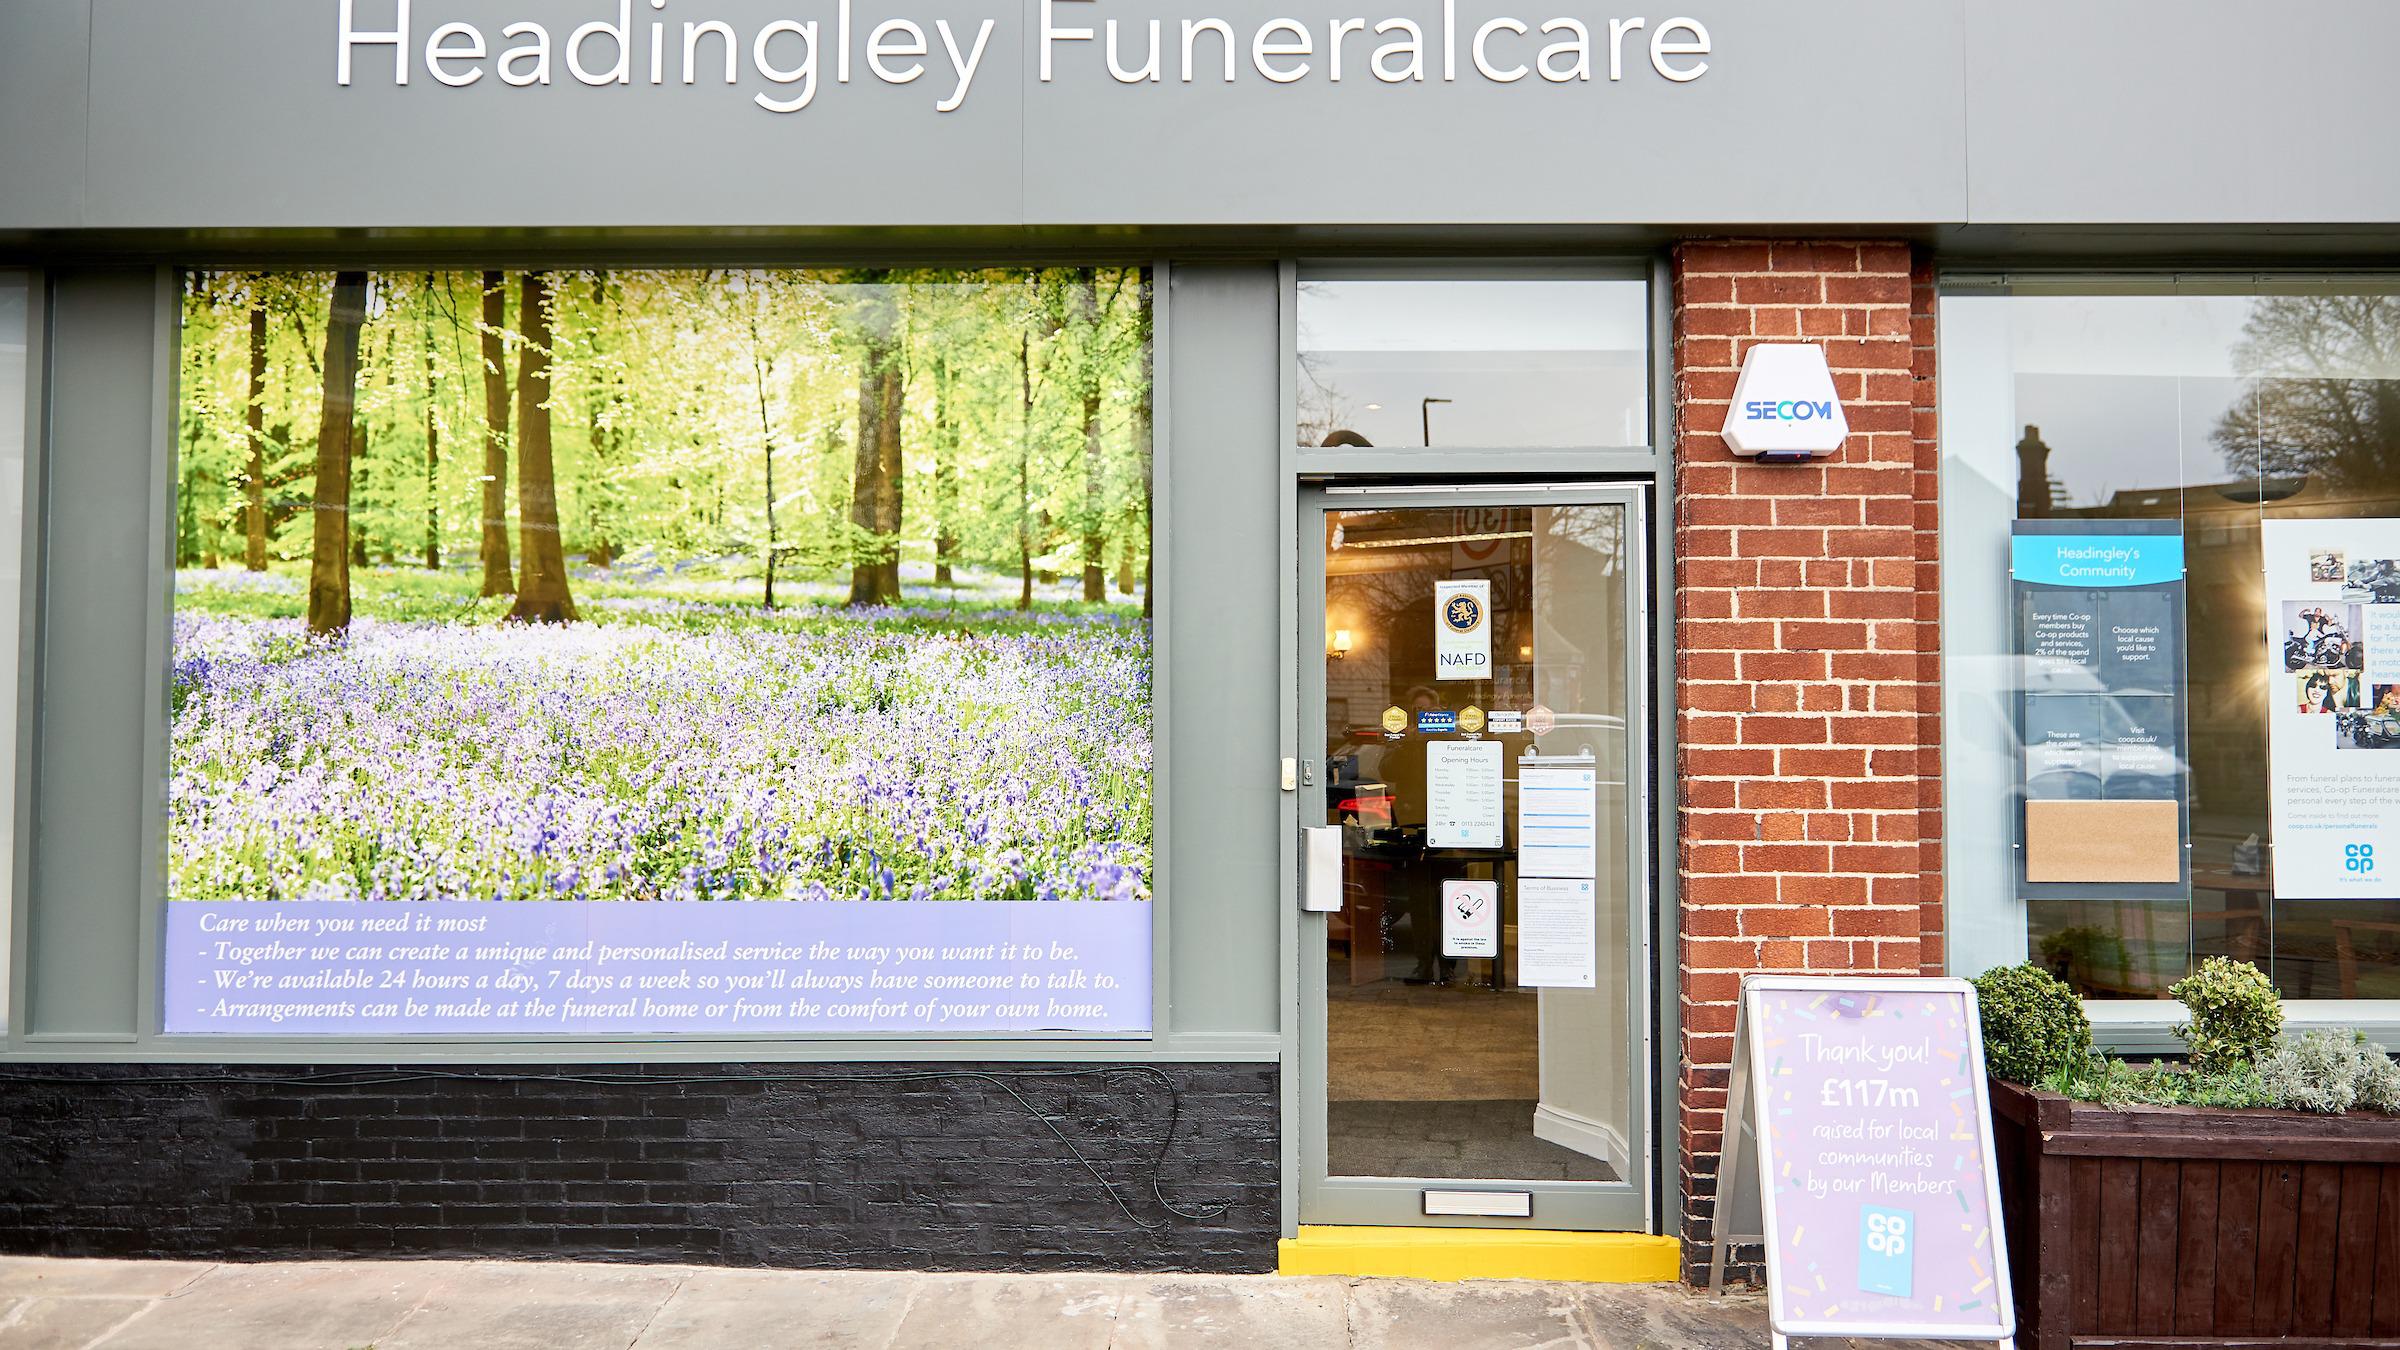 Images Co-op Funeralcare, Headingley